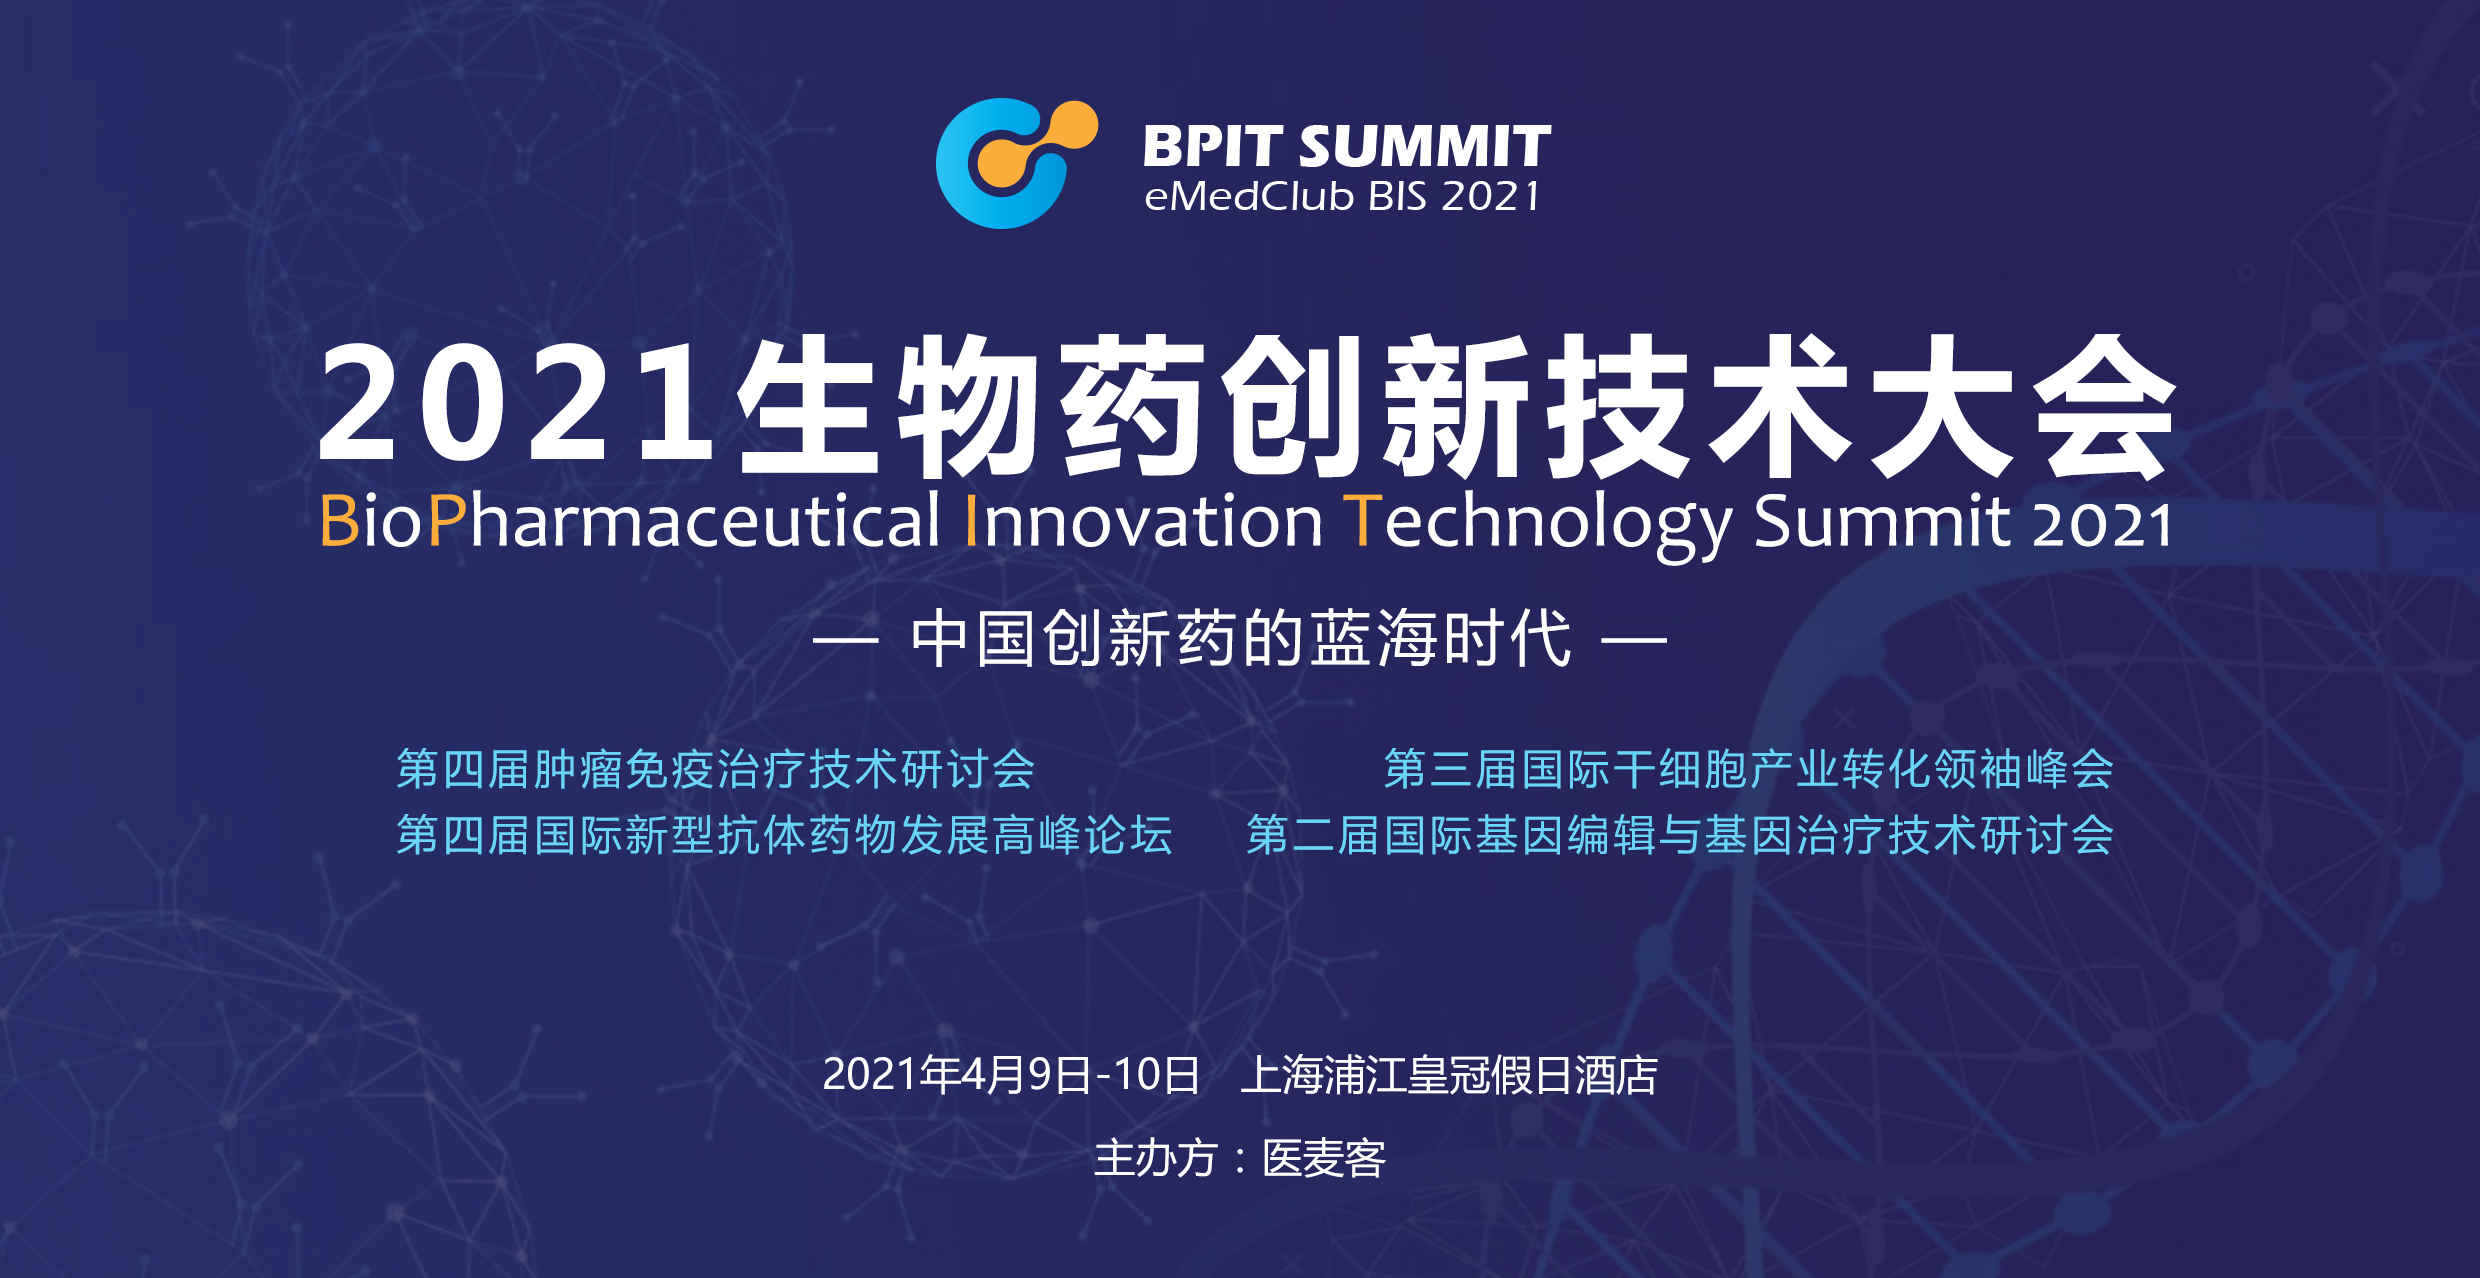 2021生物药创新技术大会（BioPharmaceutical Innovation Technology Summit 2021）